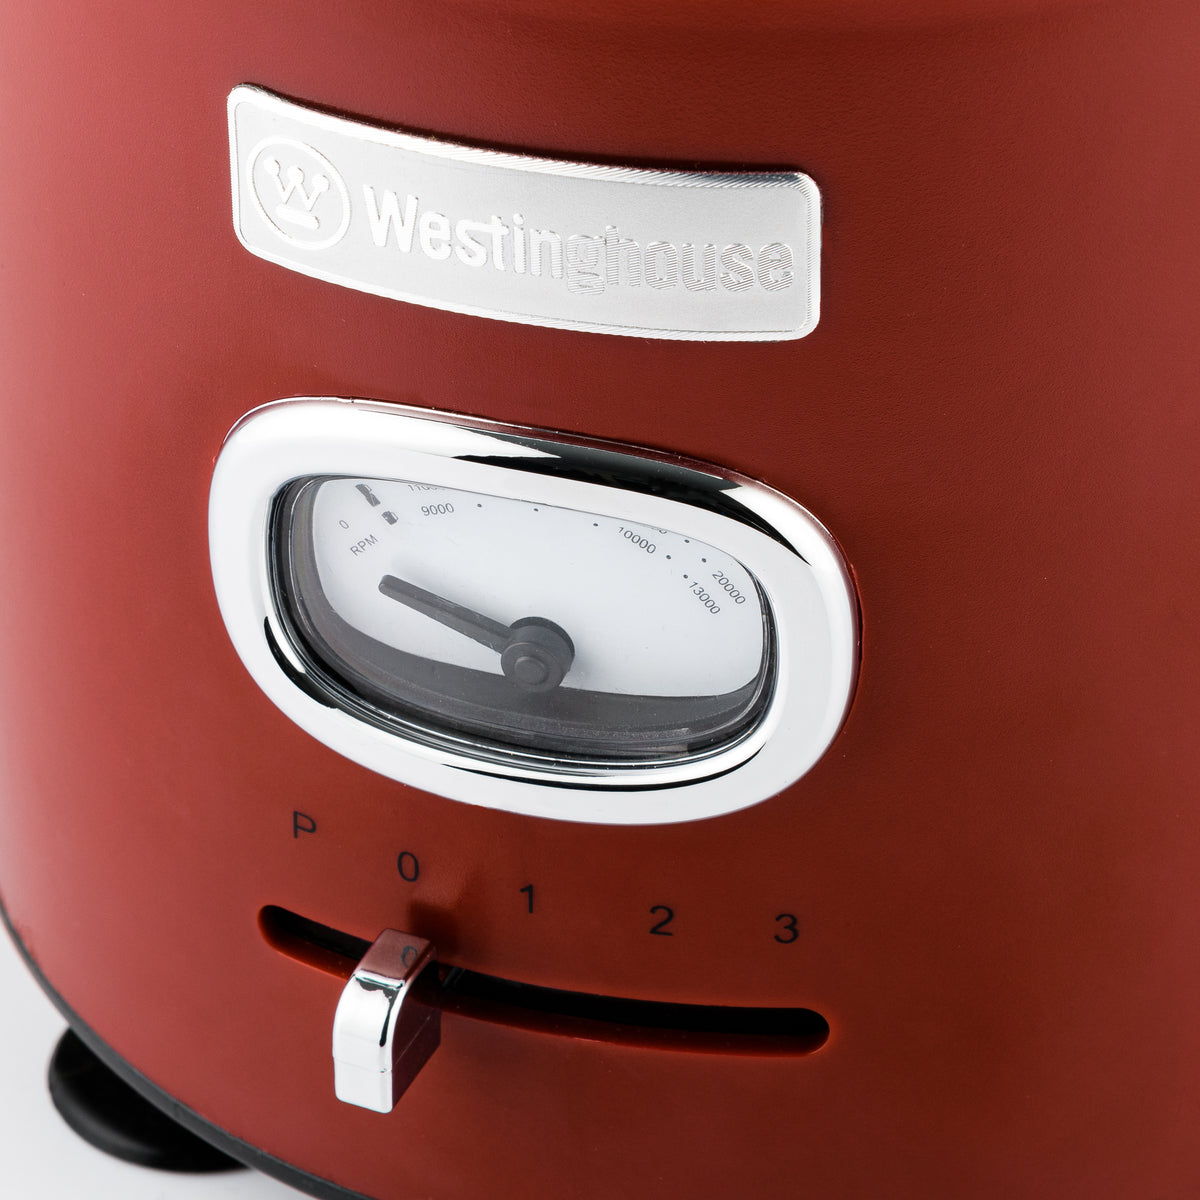 Westinghouse Retro Toaster - Grille-pain à 4 fentes - Rouge